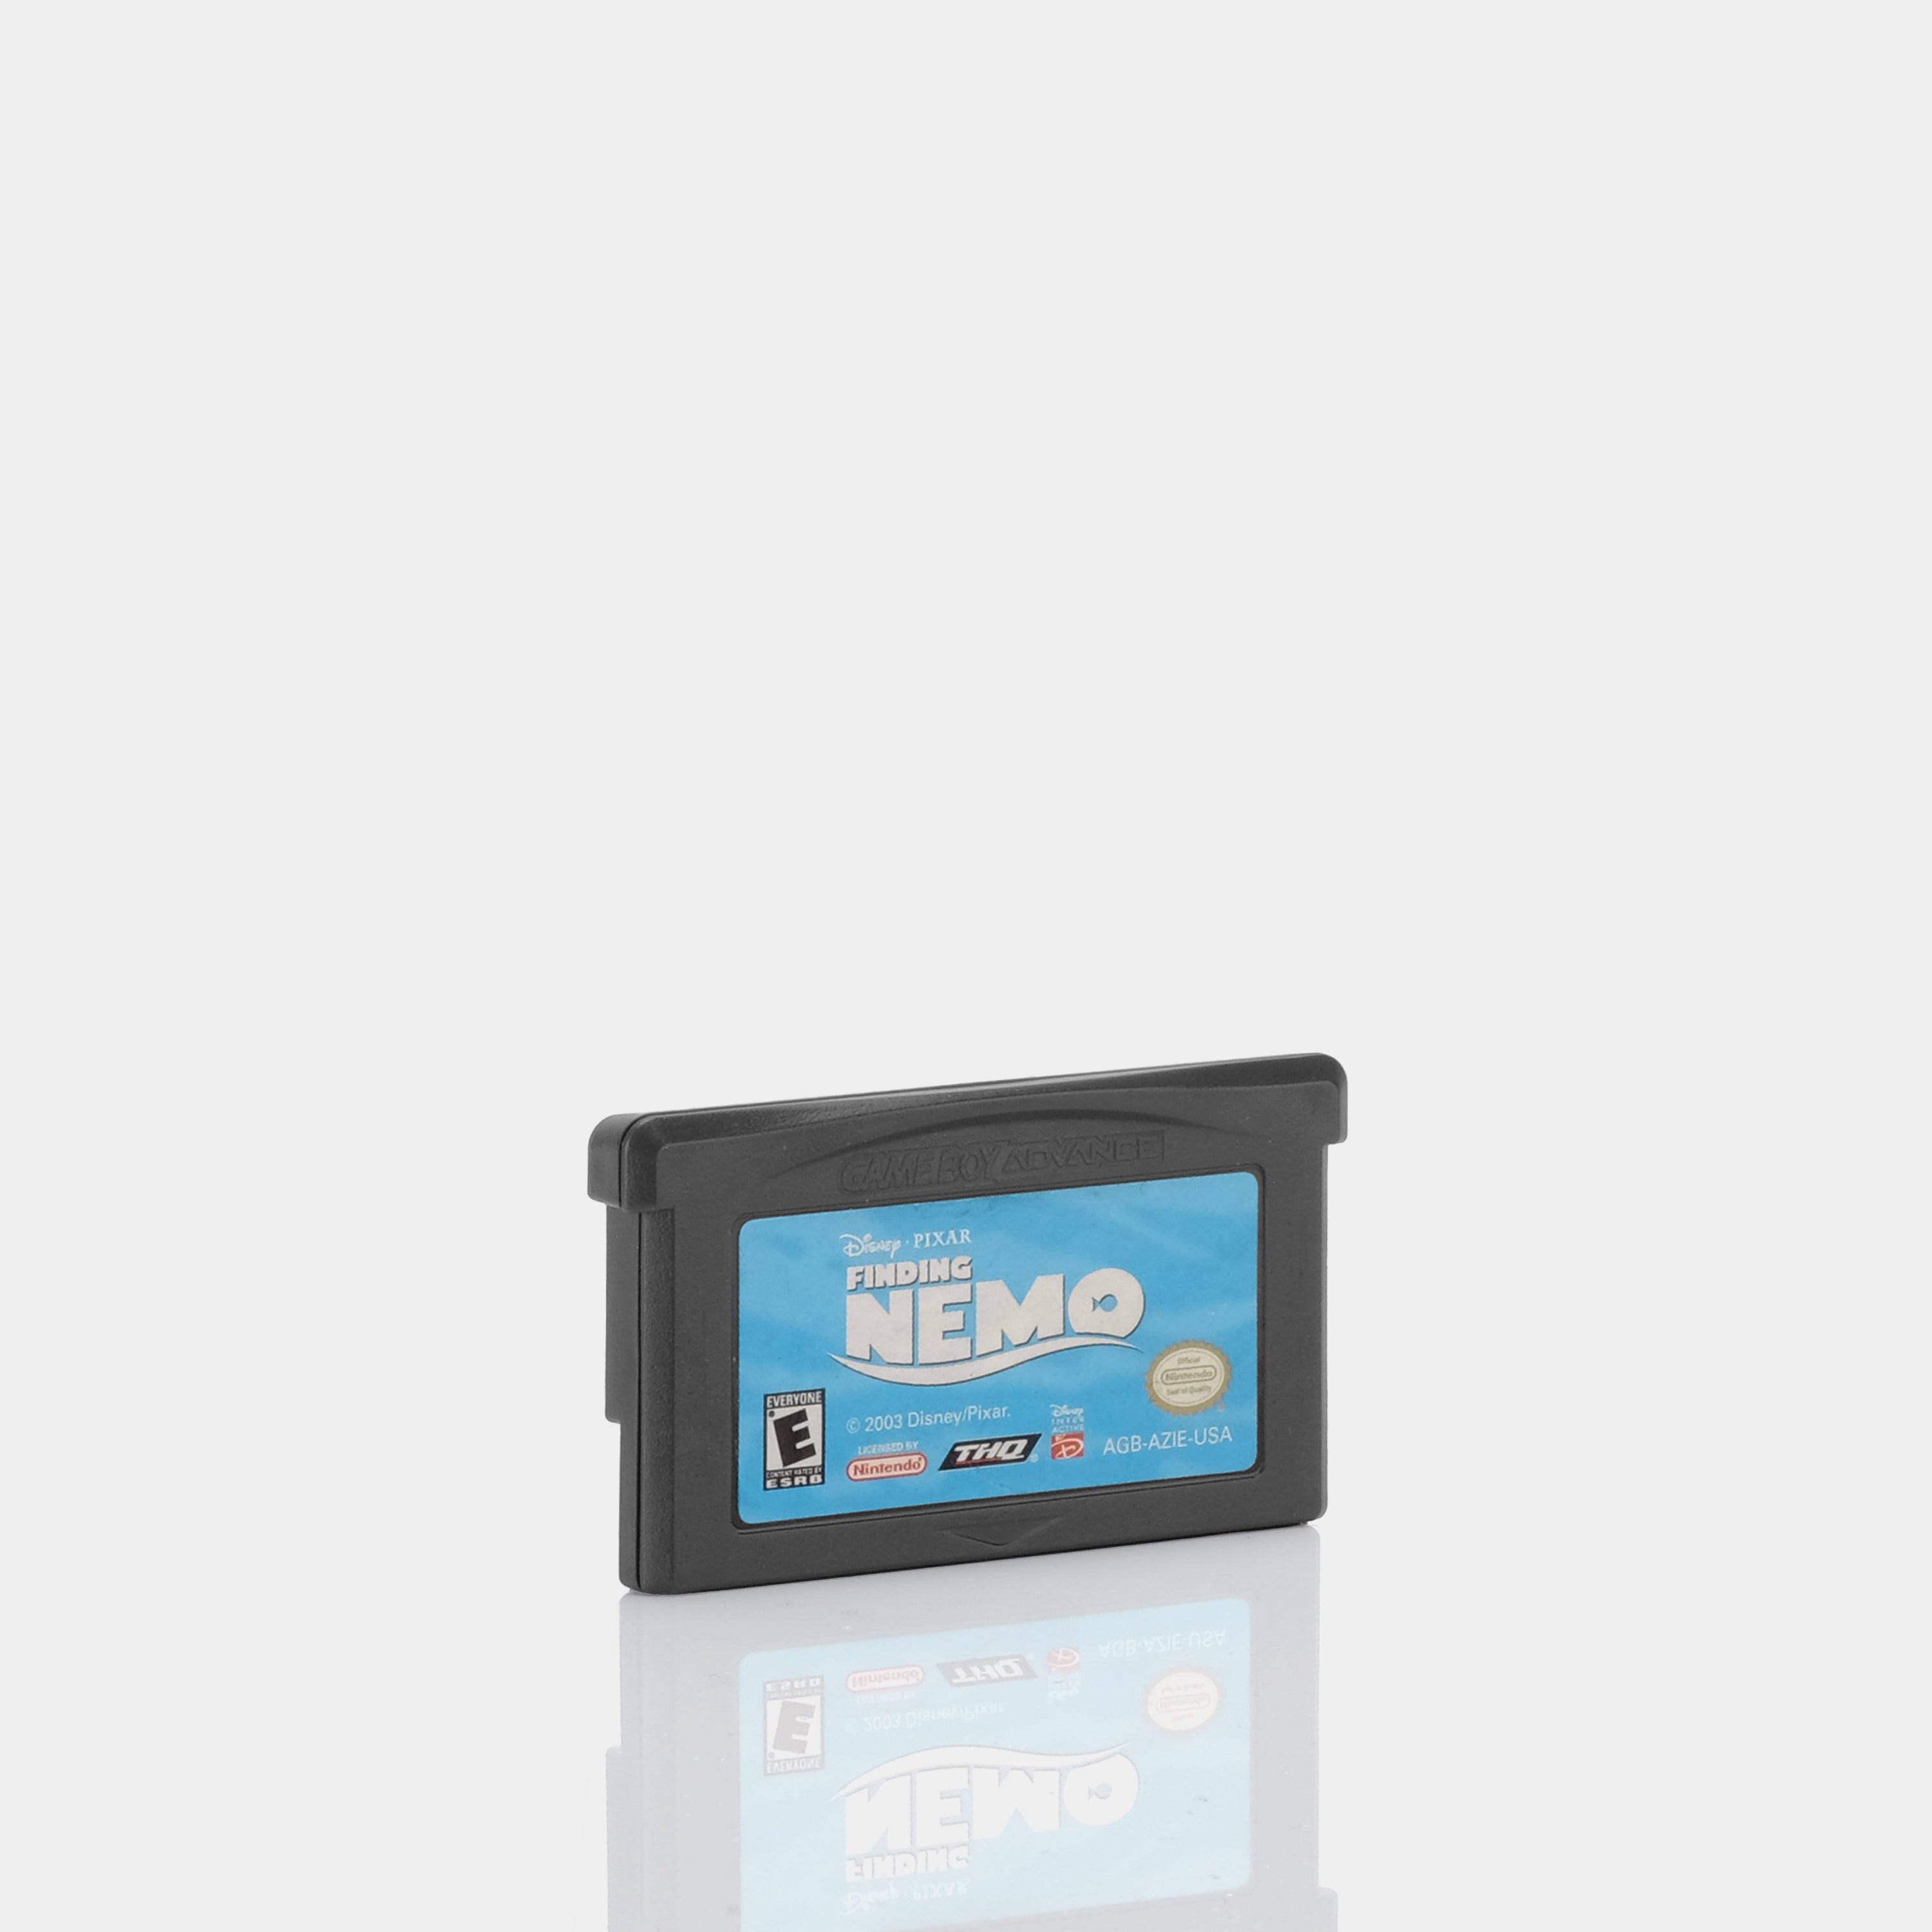 Disney/Pixar Finding Nemo Game Boy Advance Game